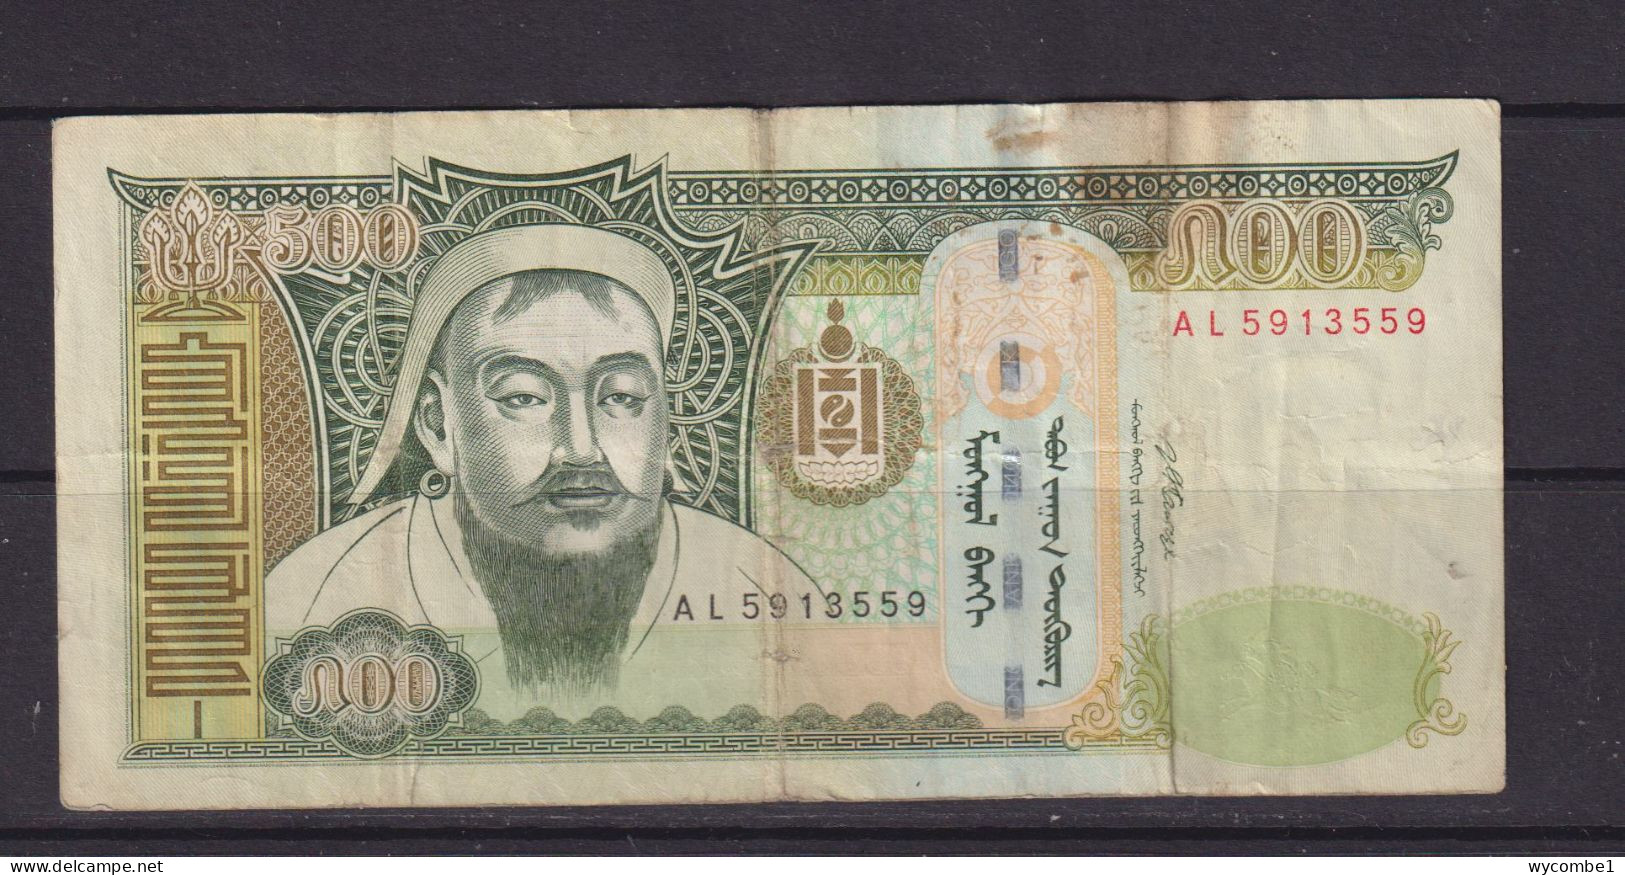 MONGOLIA - 2007 1000 Tugrik Circulated Banknote - Mongolia